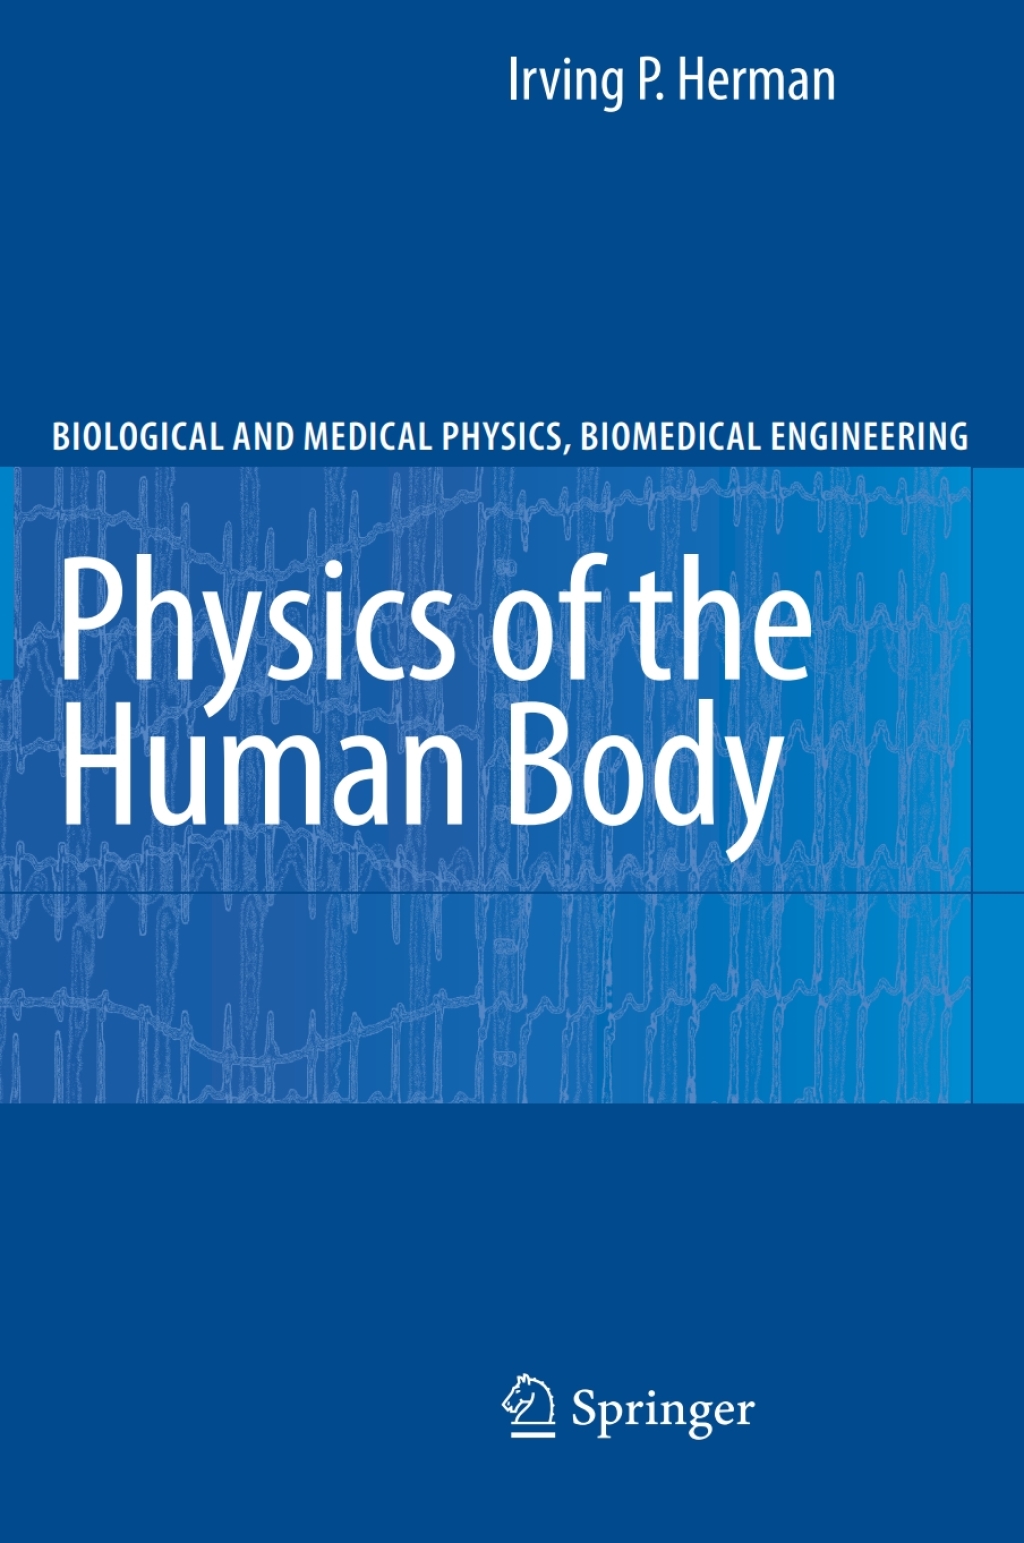 Physics of the Human Body (eBook Rental) - Irving Herman,